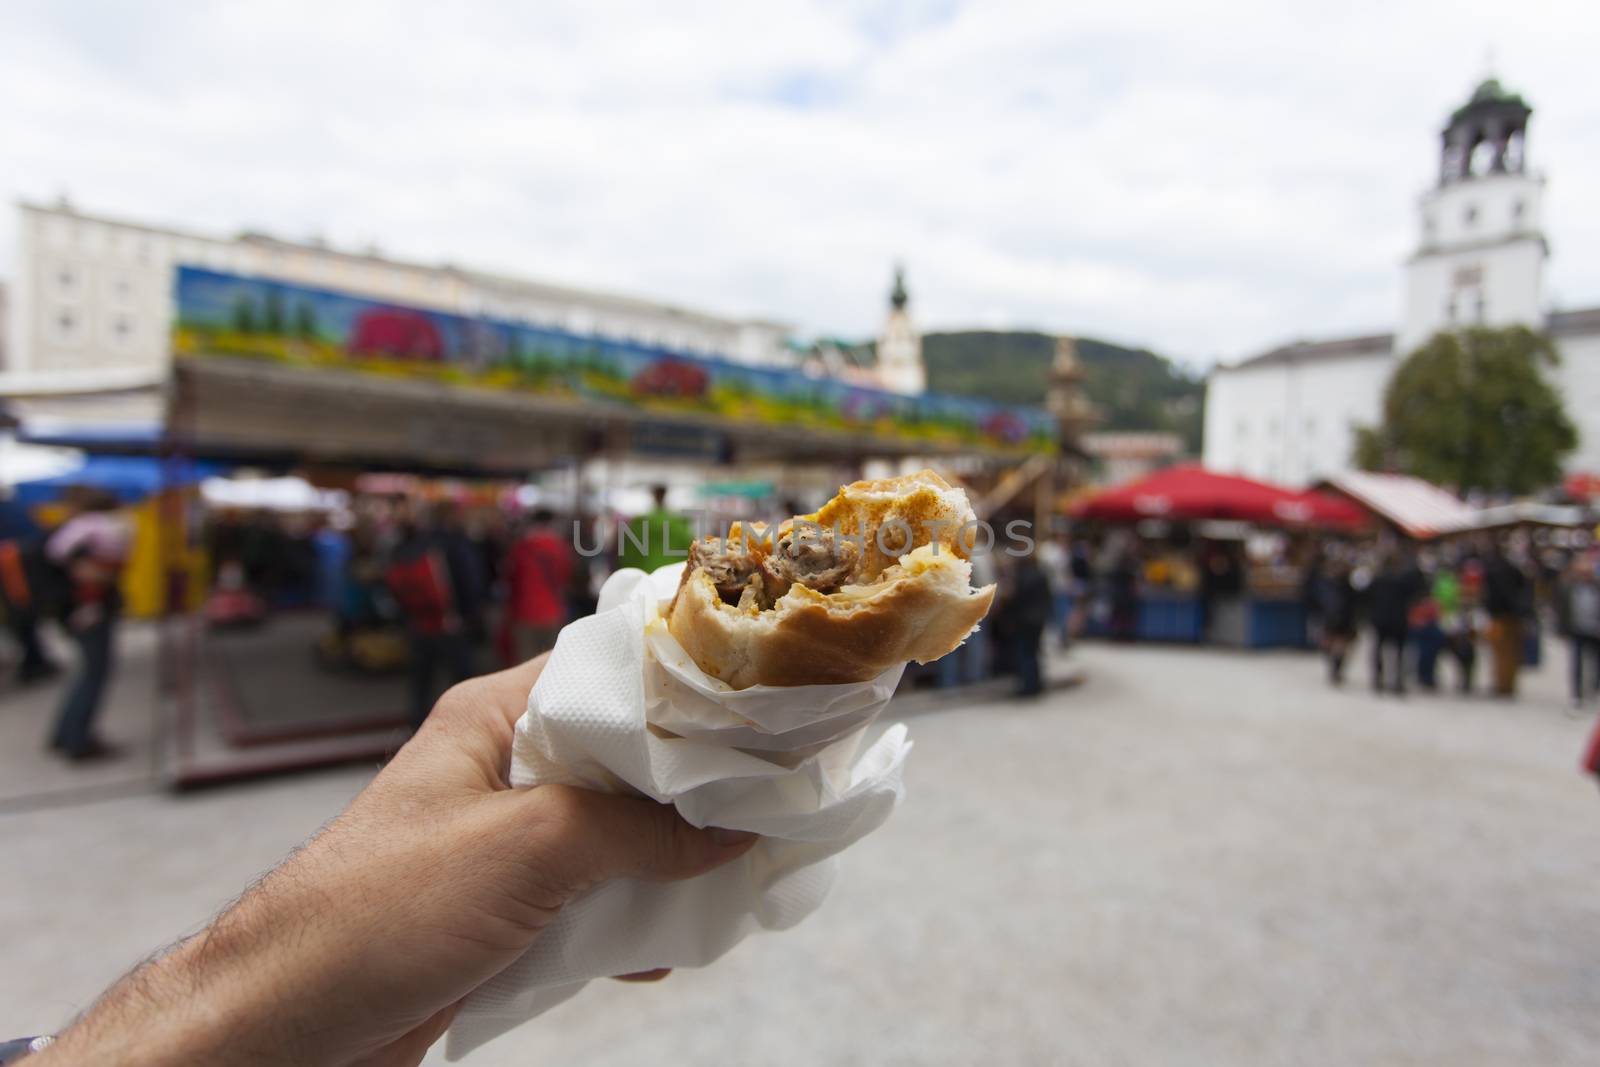 bosna hotdog in Salzburg by bernjuer